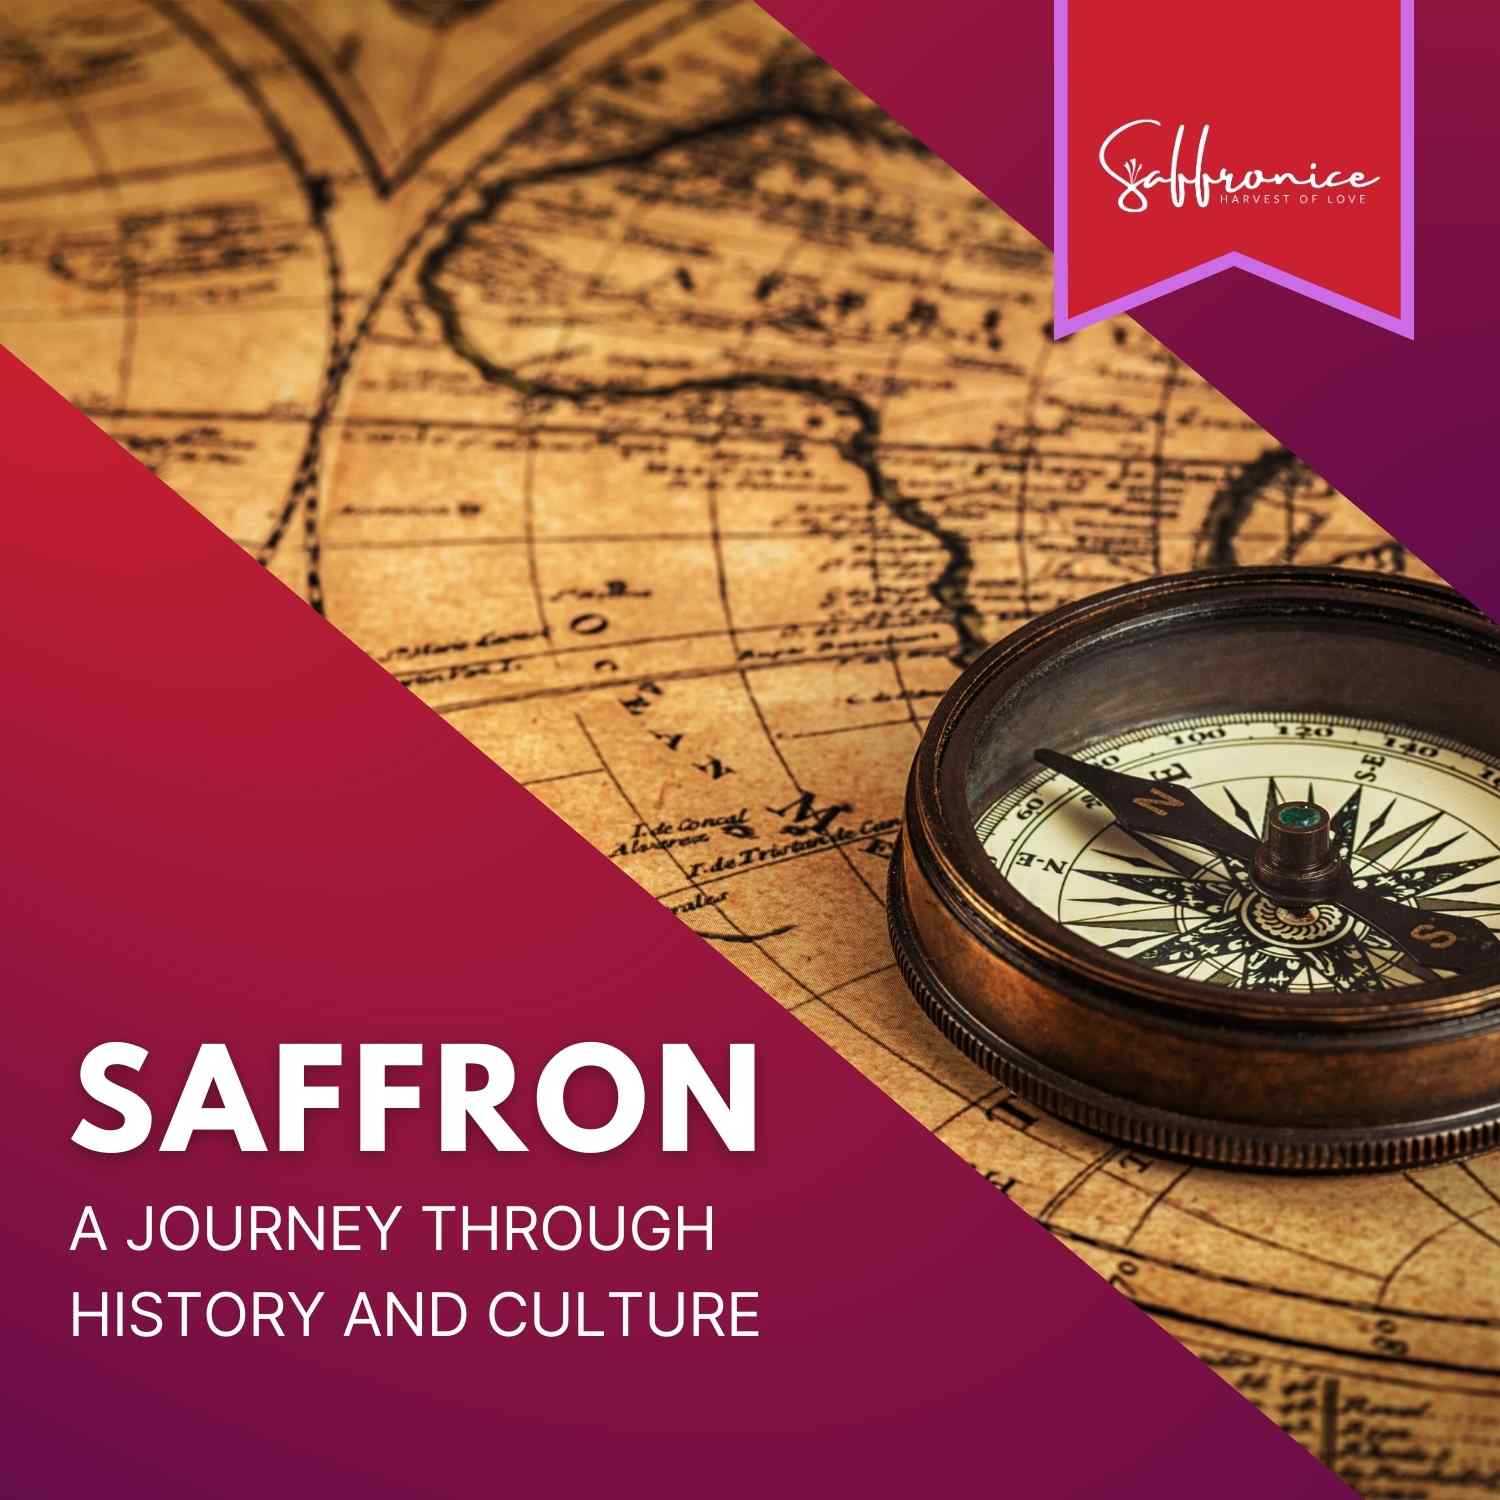 Saffron's journey through history and culture